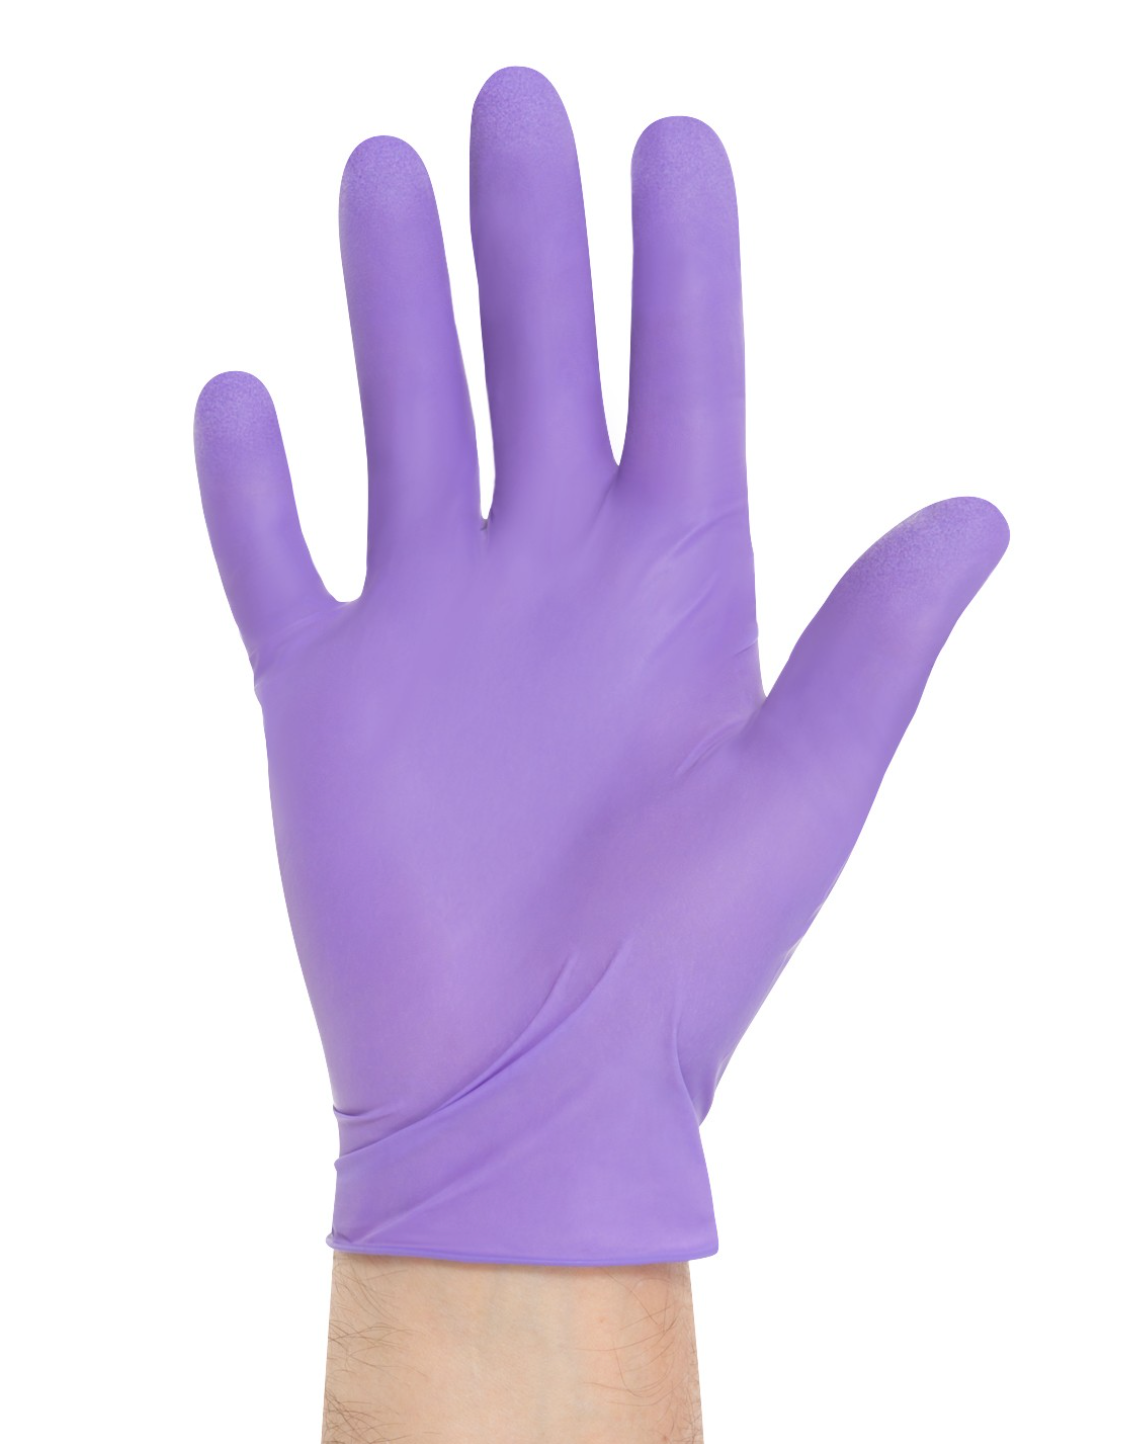 PURPLE Nitrile Gloves, Large, Case of 1000